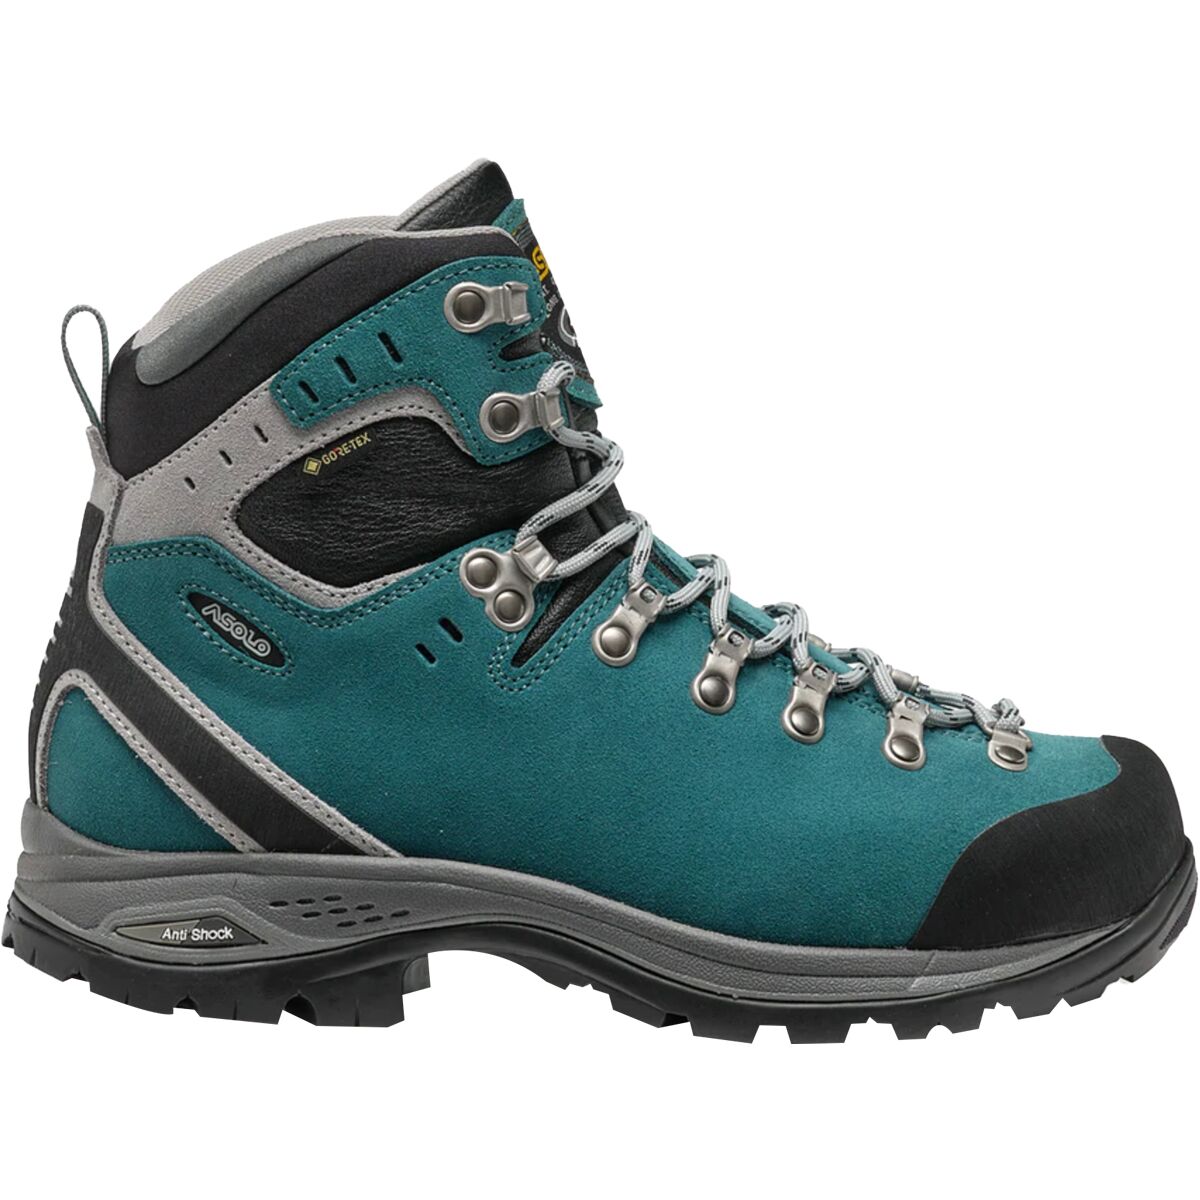 Asolo Greenwood Evo GV Hiking Boot - Bunion Fit - Women's